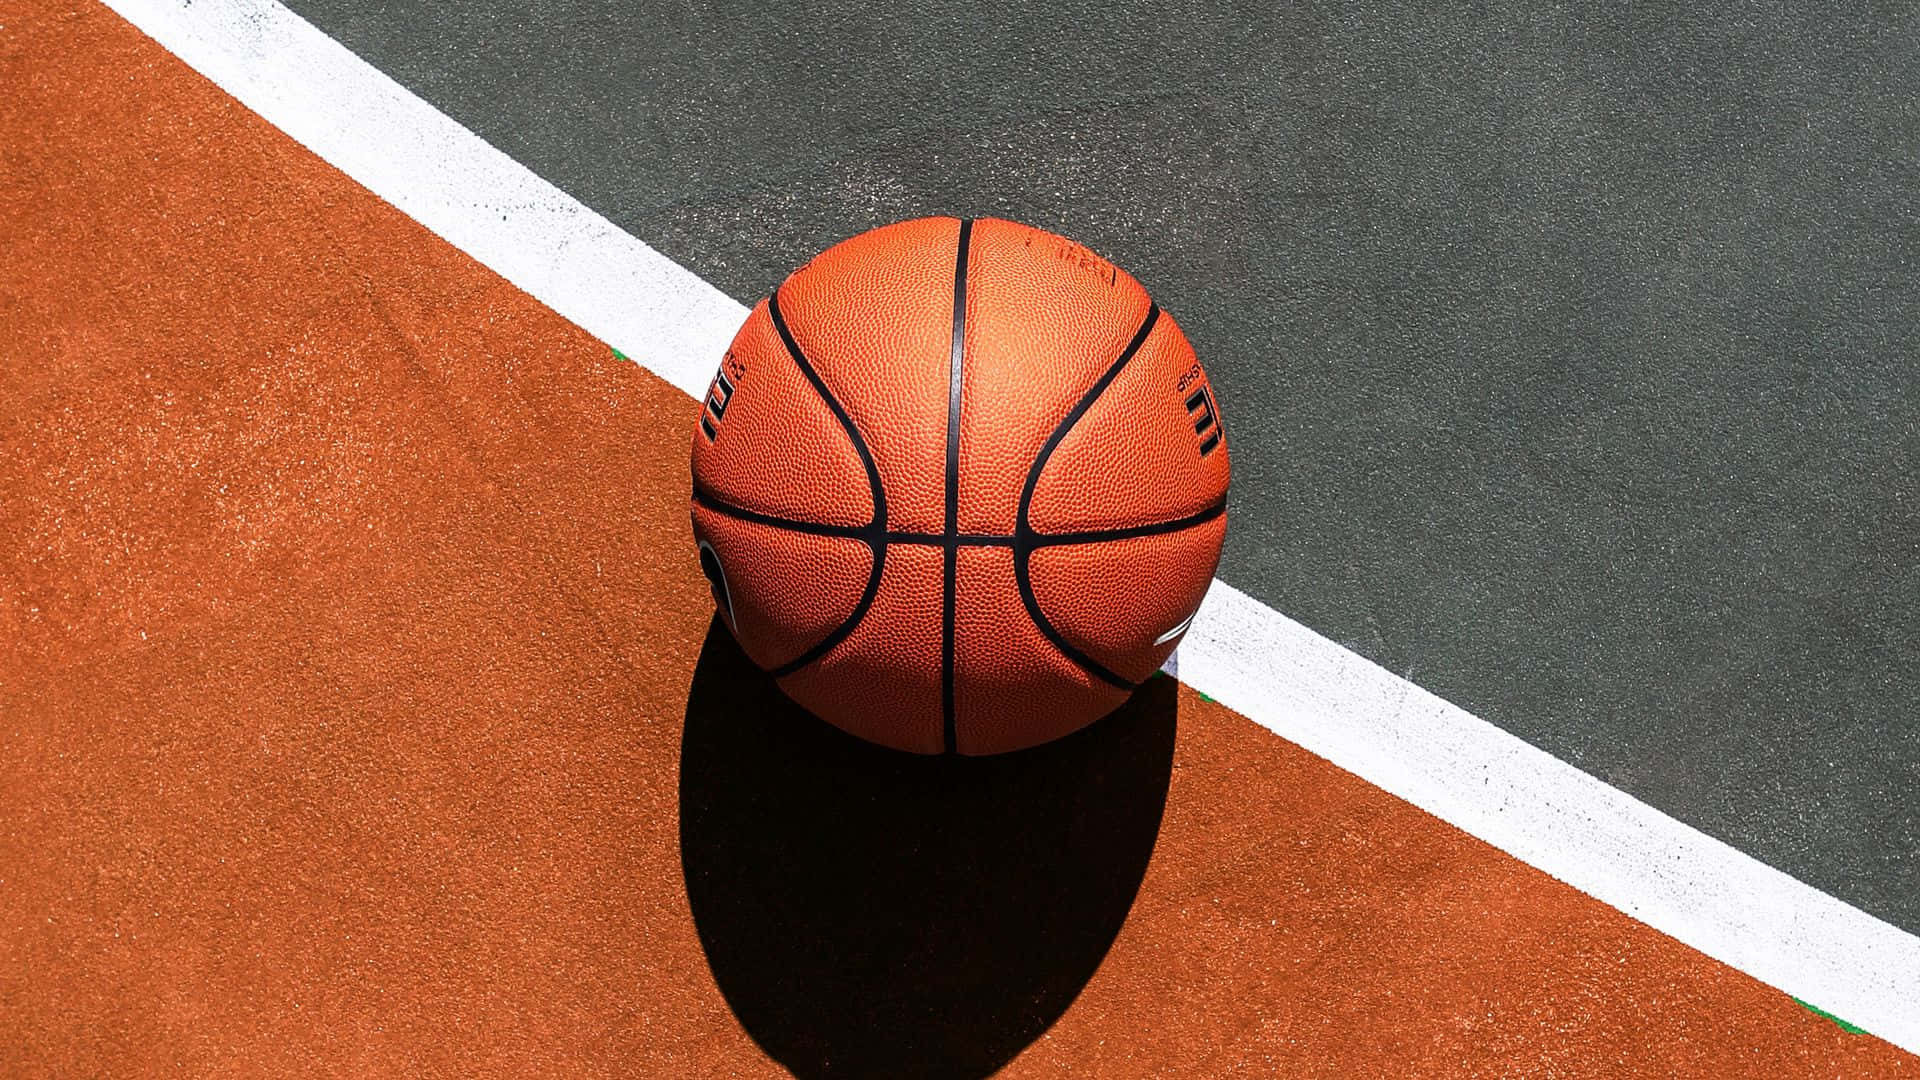 Image  A High Definition Basketball Scene